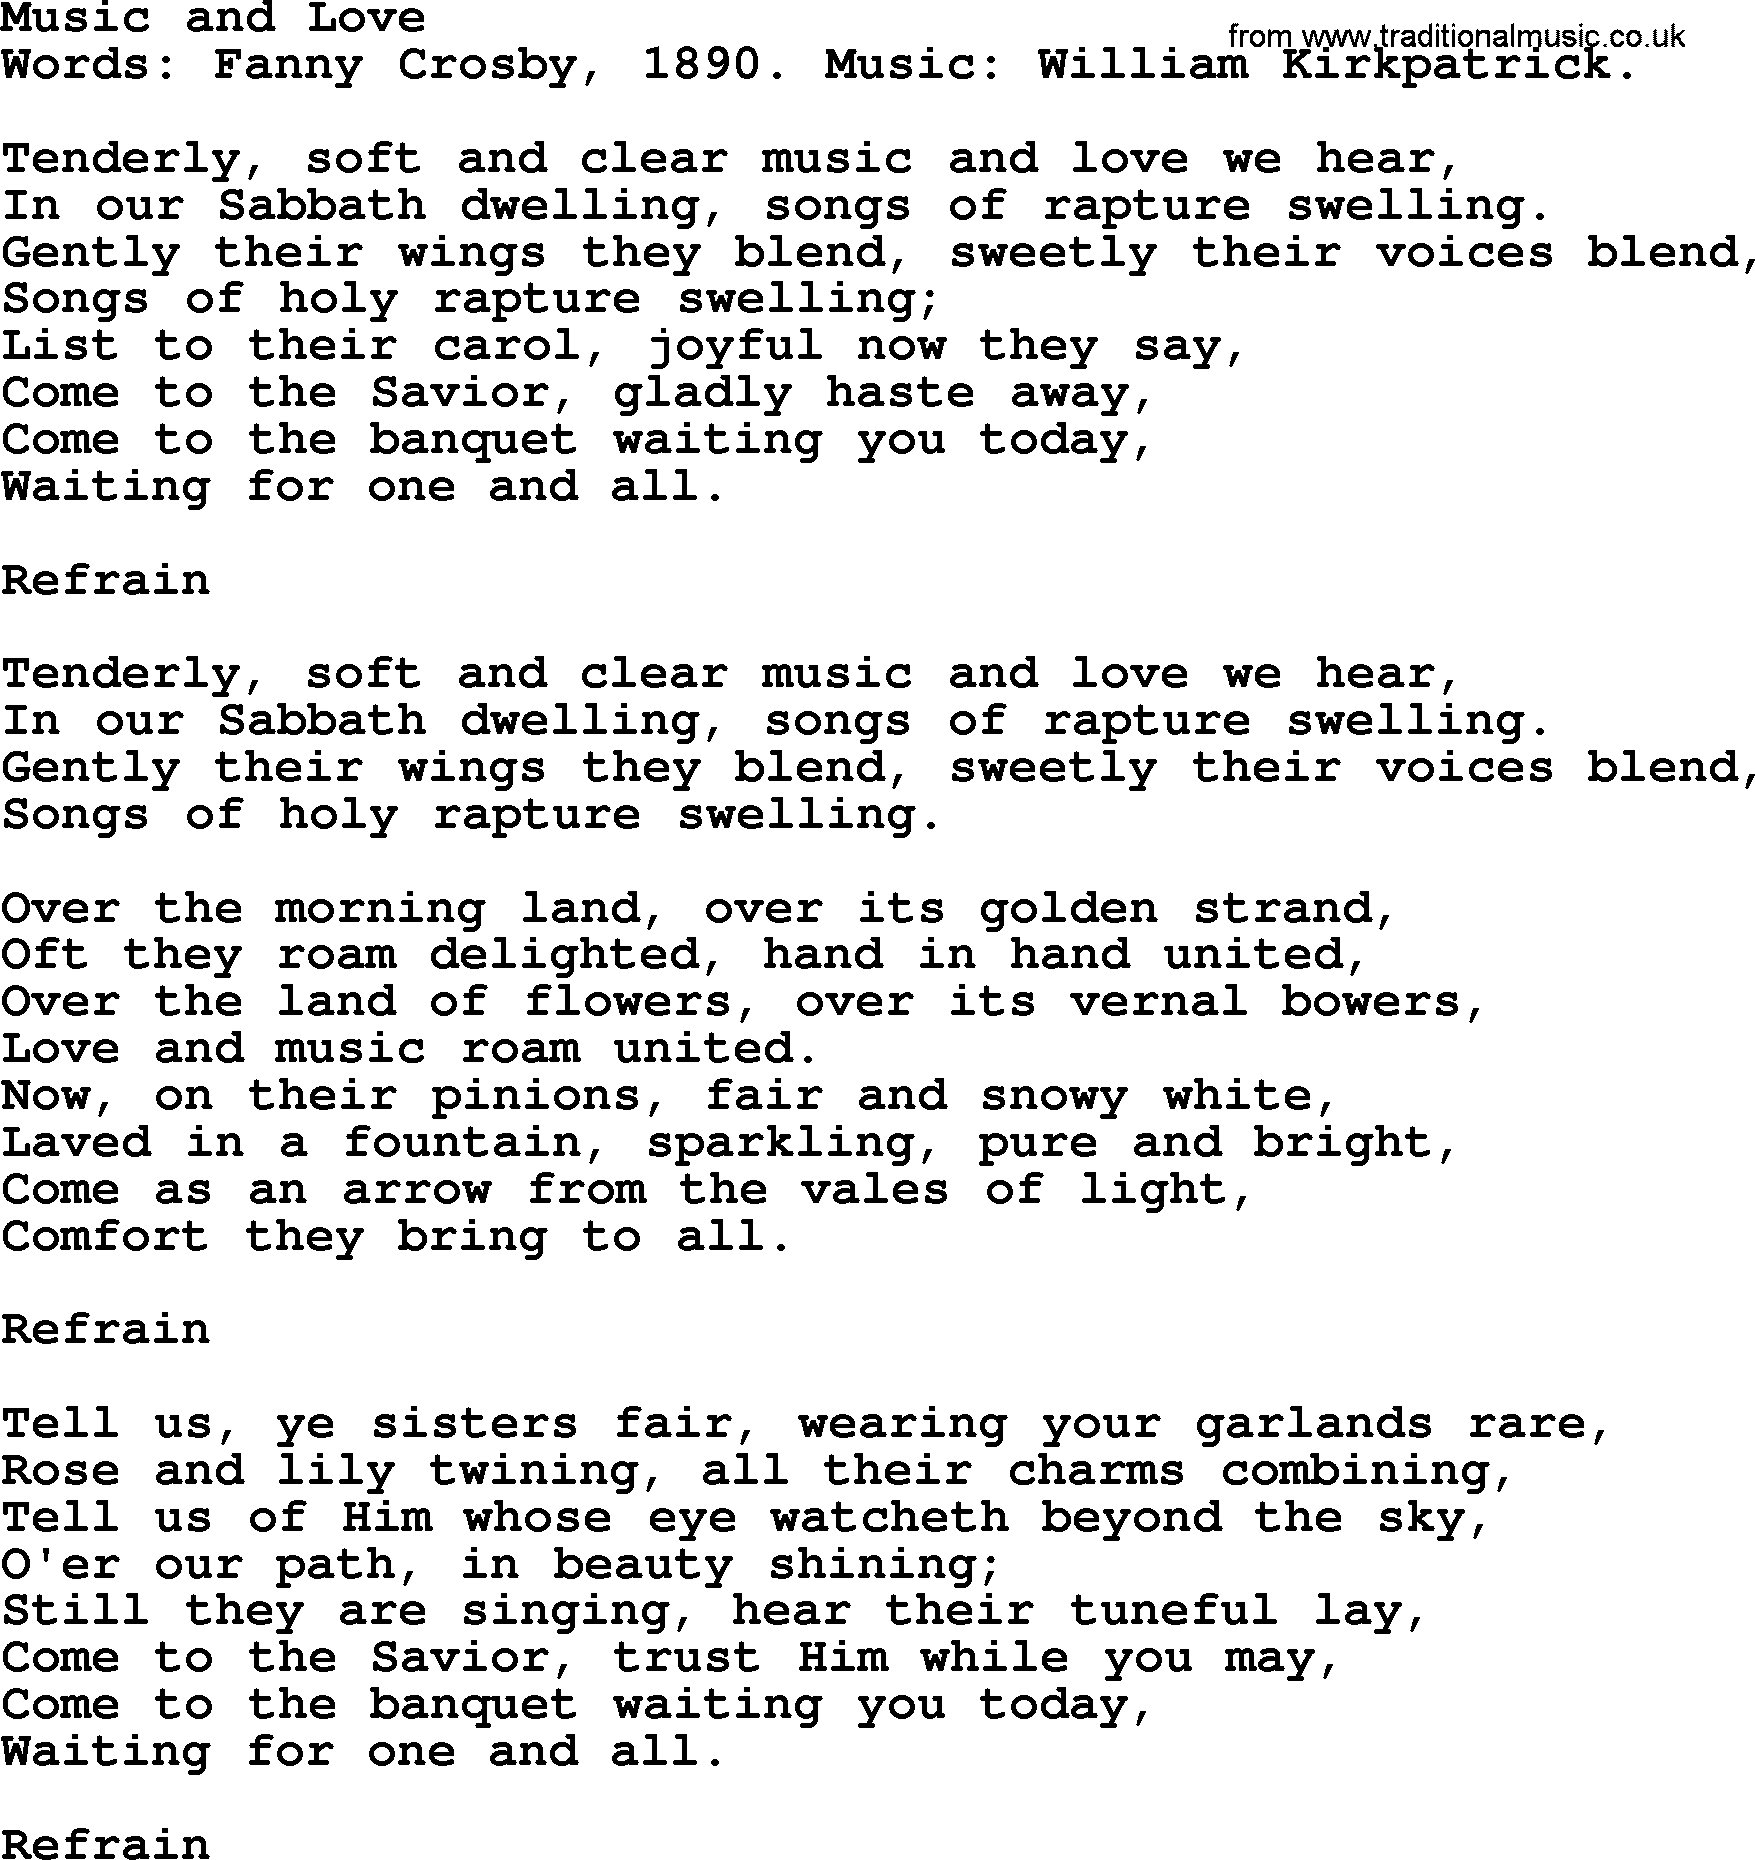 Fanny Crosby song: Music And Love, lyrics